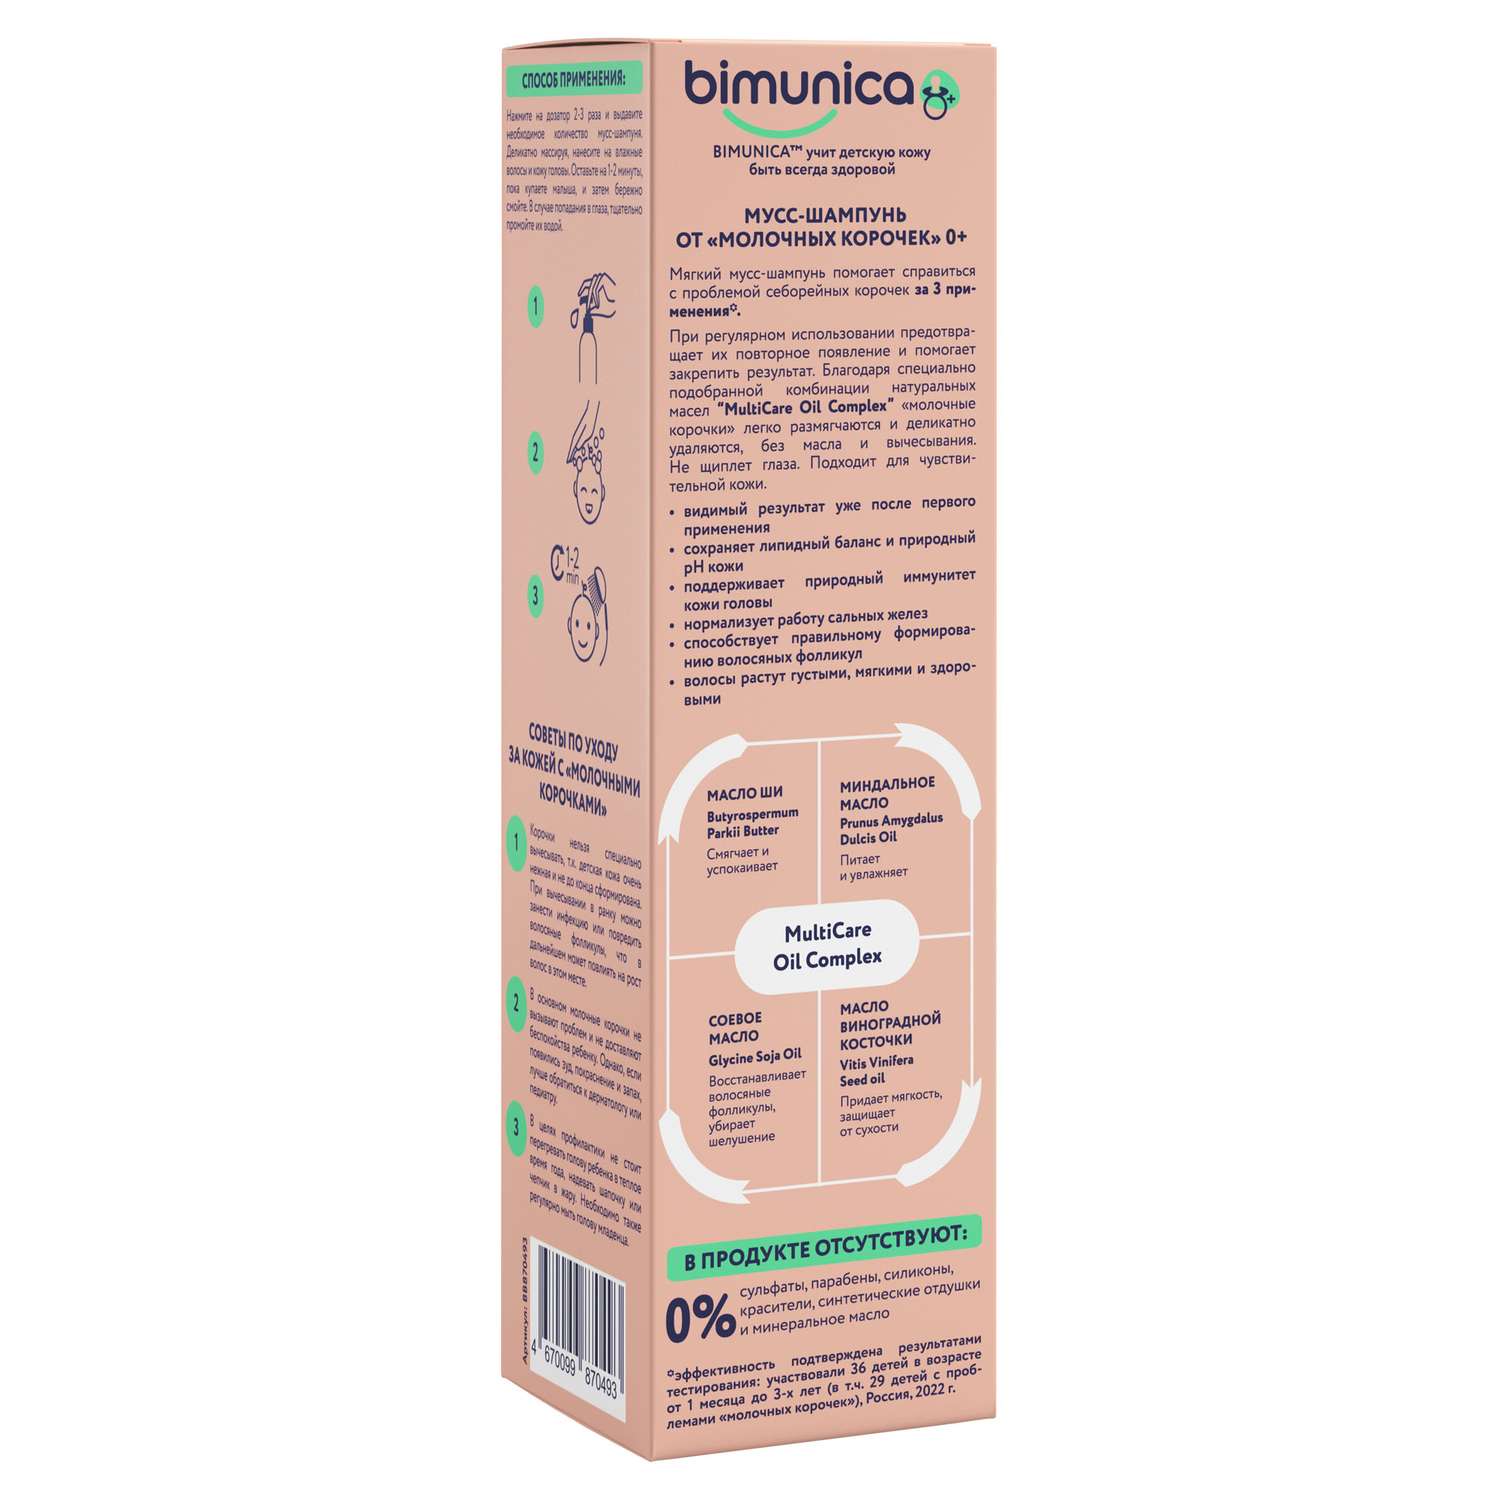 Мусс-шампунь Bimunica от молочных корочек 0+ 100 мл - фото 5